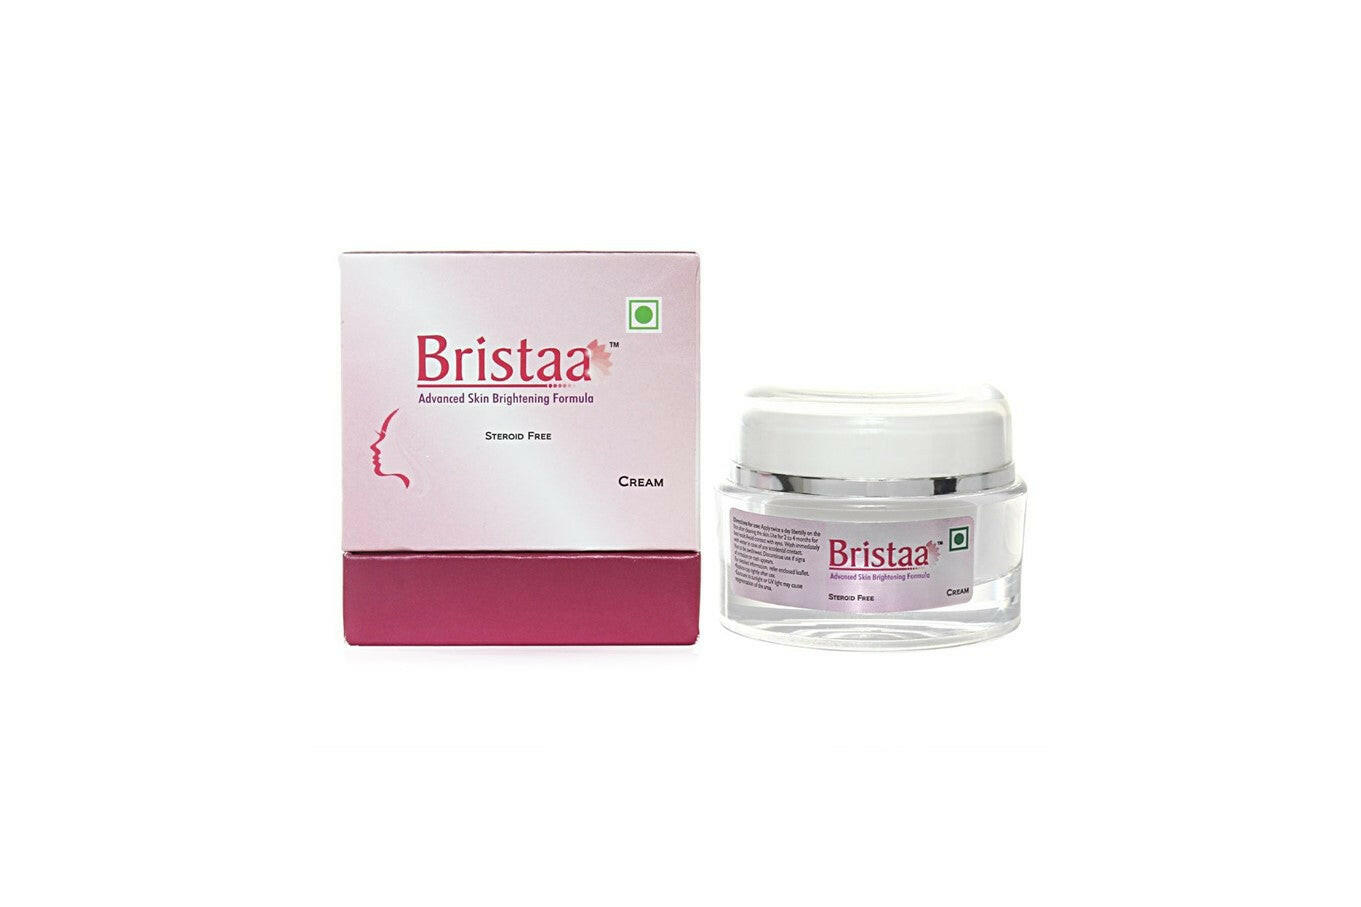 Bristaa Advanced Skin Brightening Formula 20gm